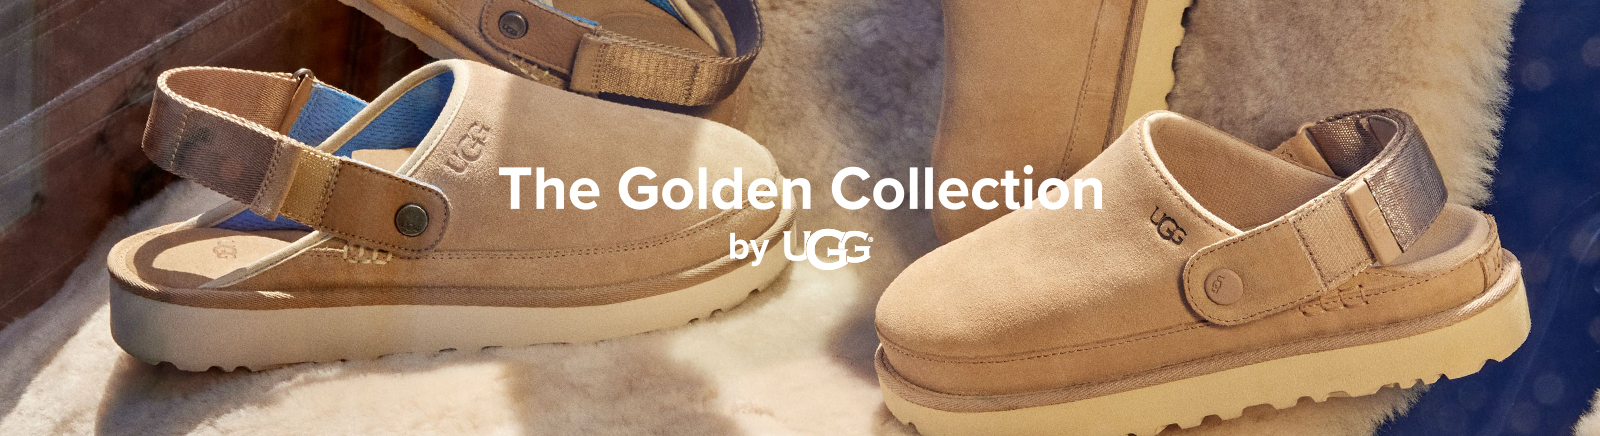 Juppen: UGG Combat Boots für Damen online shoppen